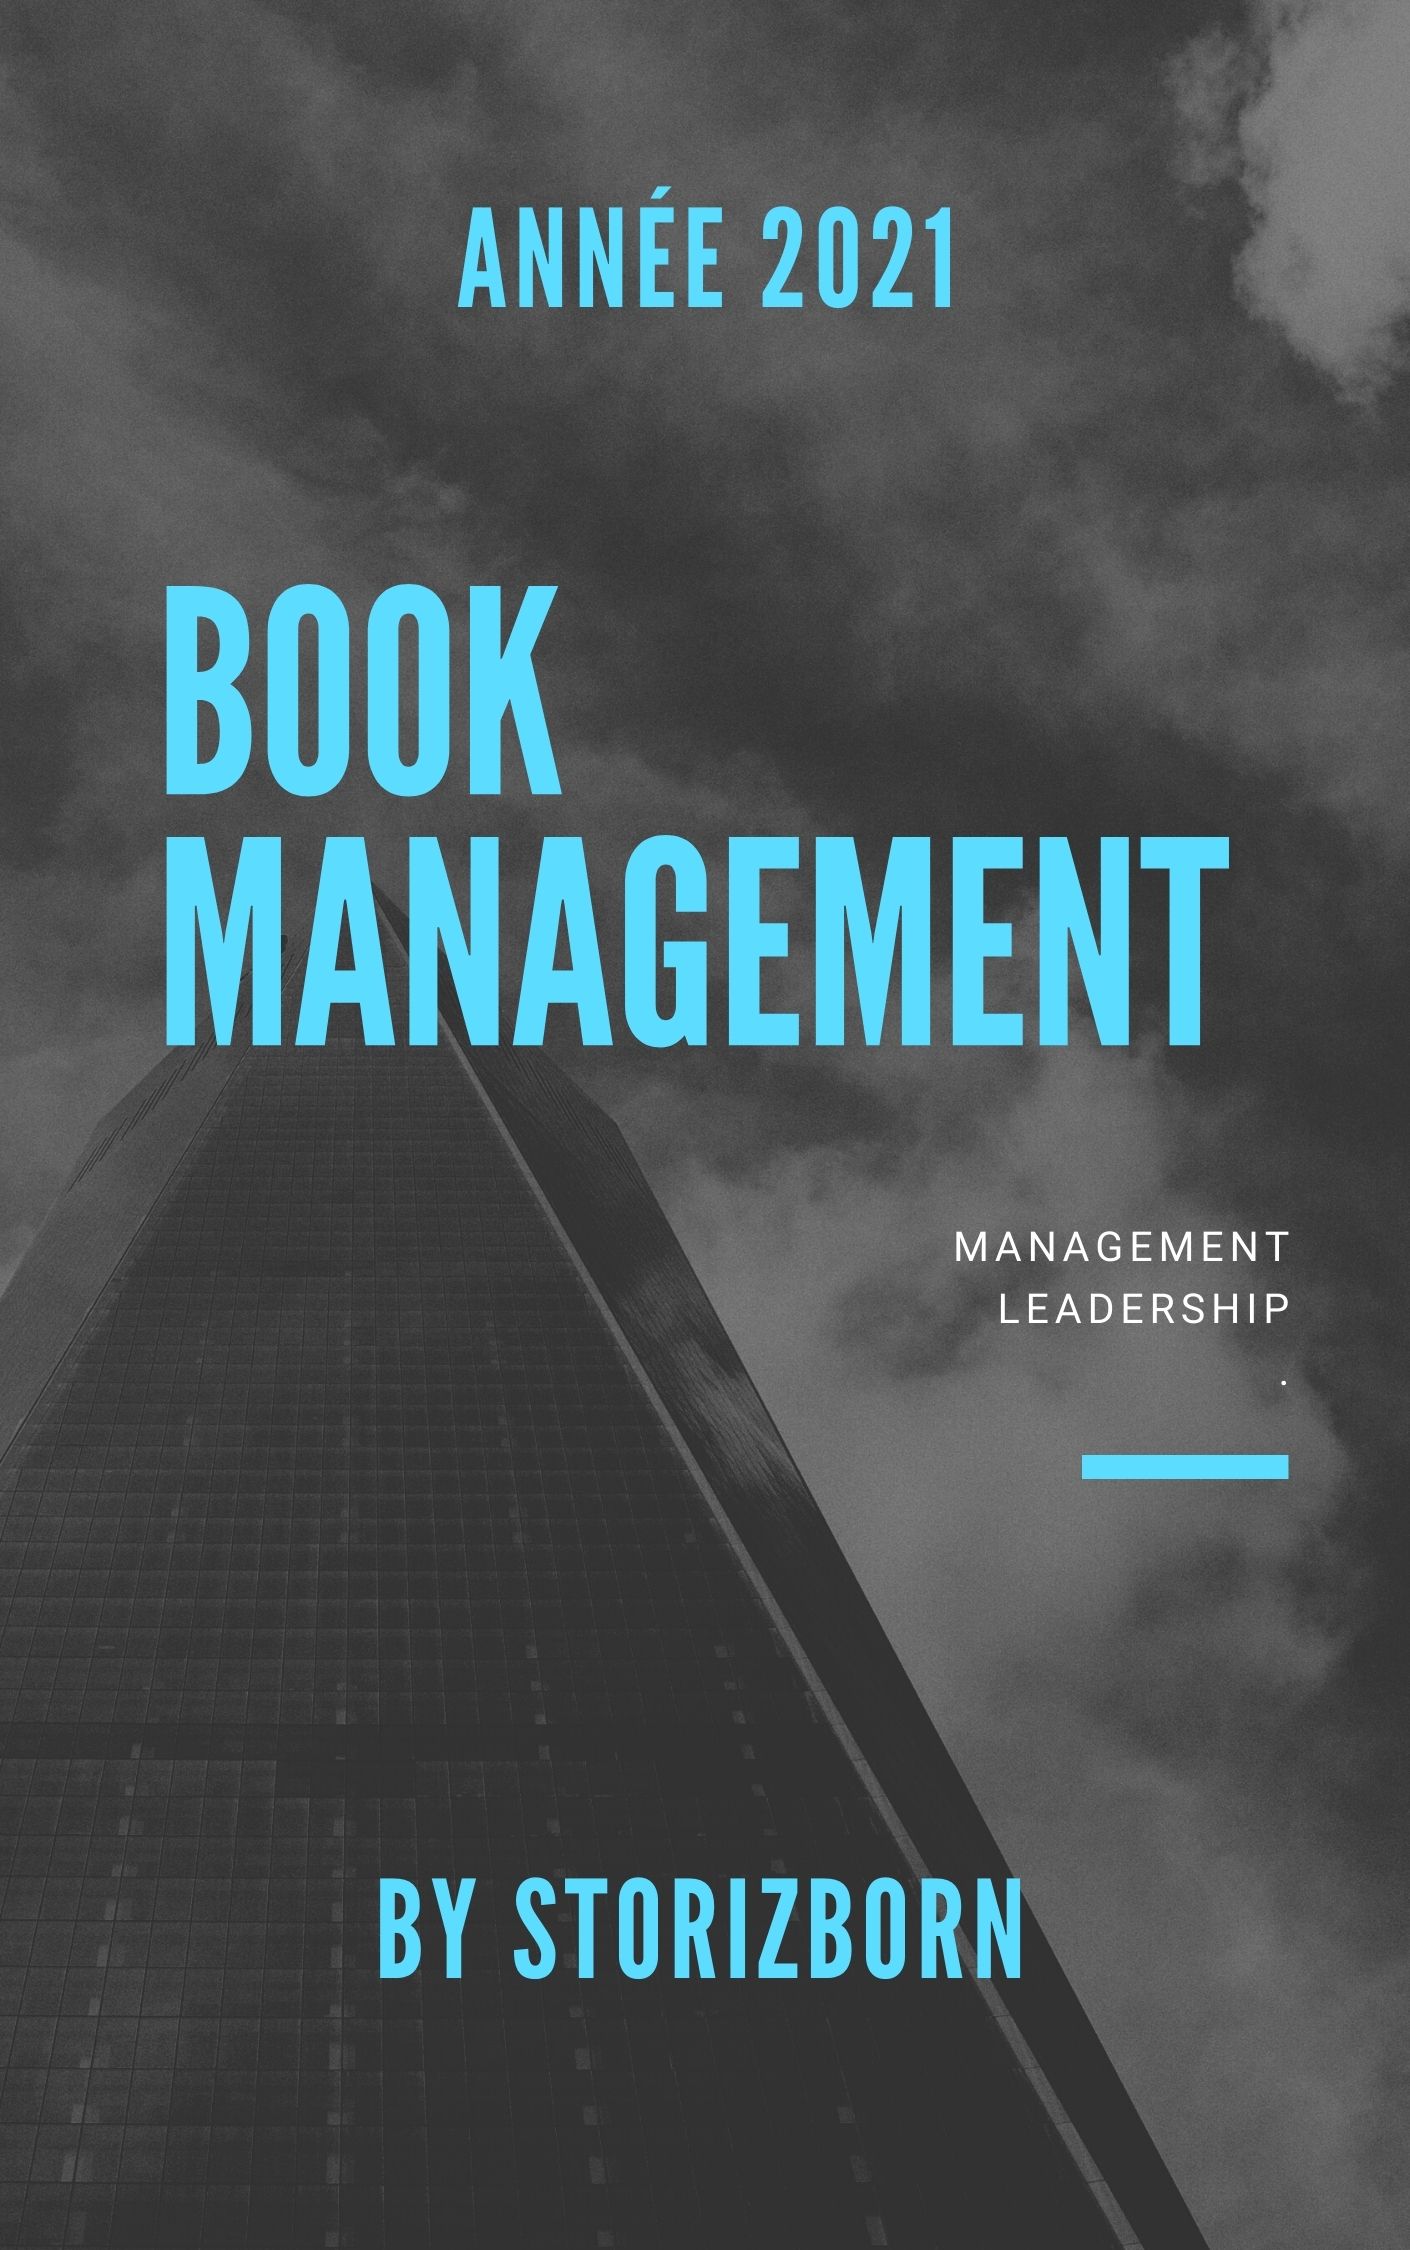  Book management 2021